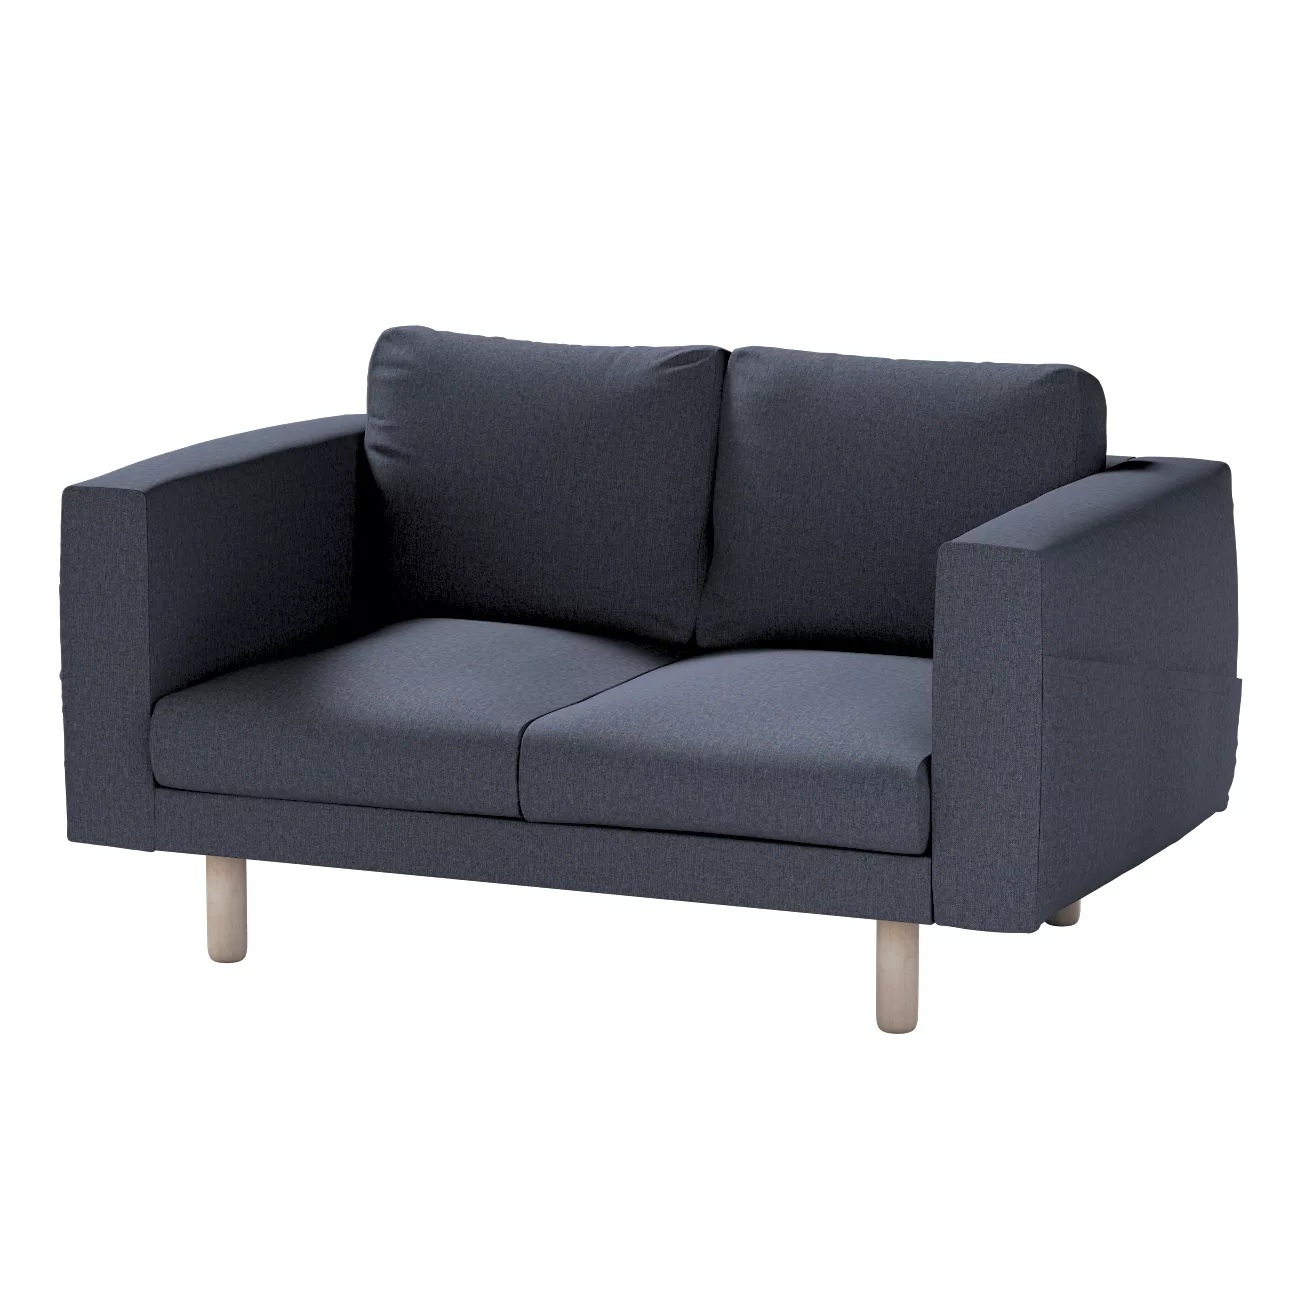 Bezug für Norsborg 2-Sitzer Sofa, dunkelblau, Norsborg 2-Sitzer Sofabezug, günstig online kaufen